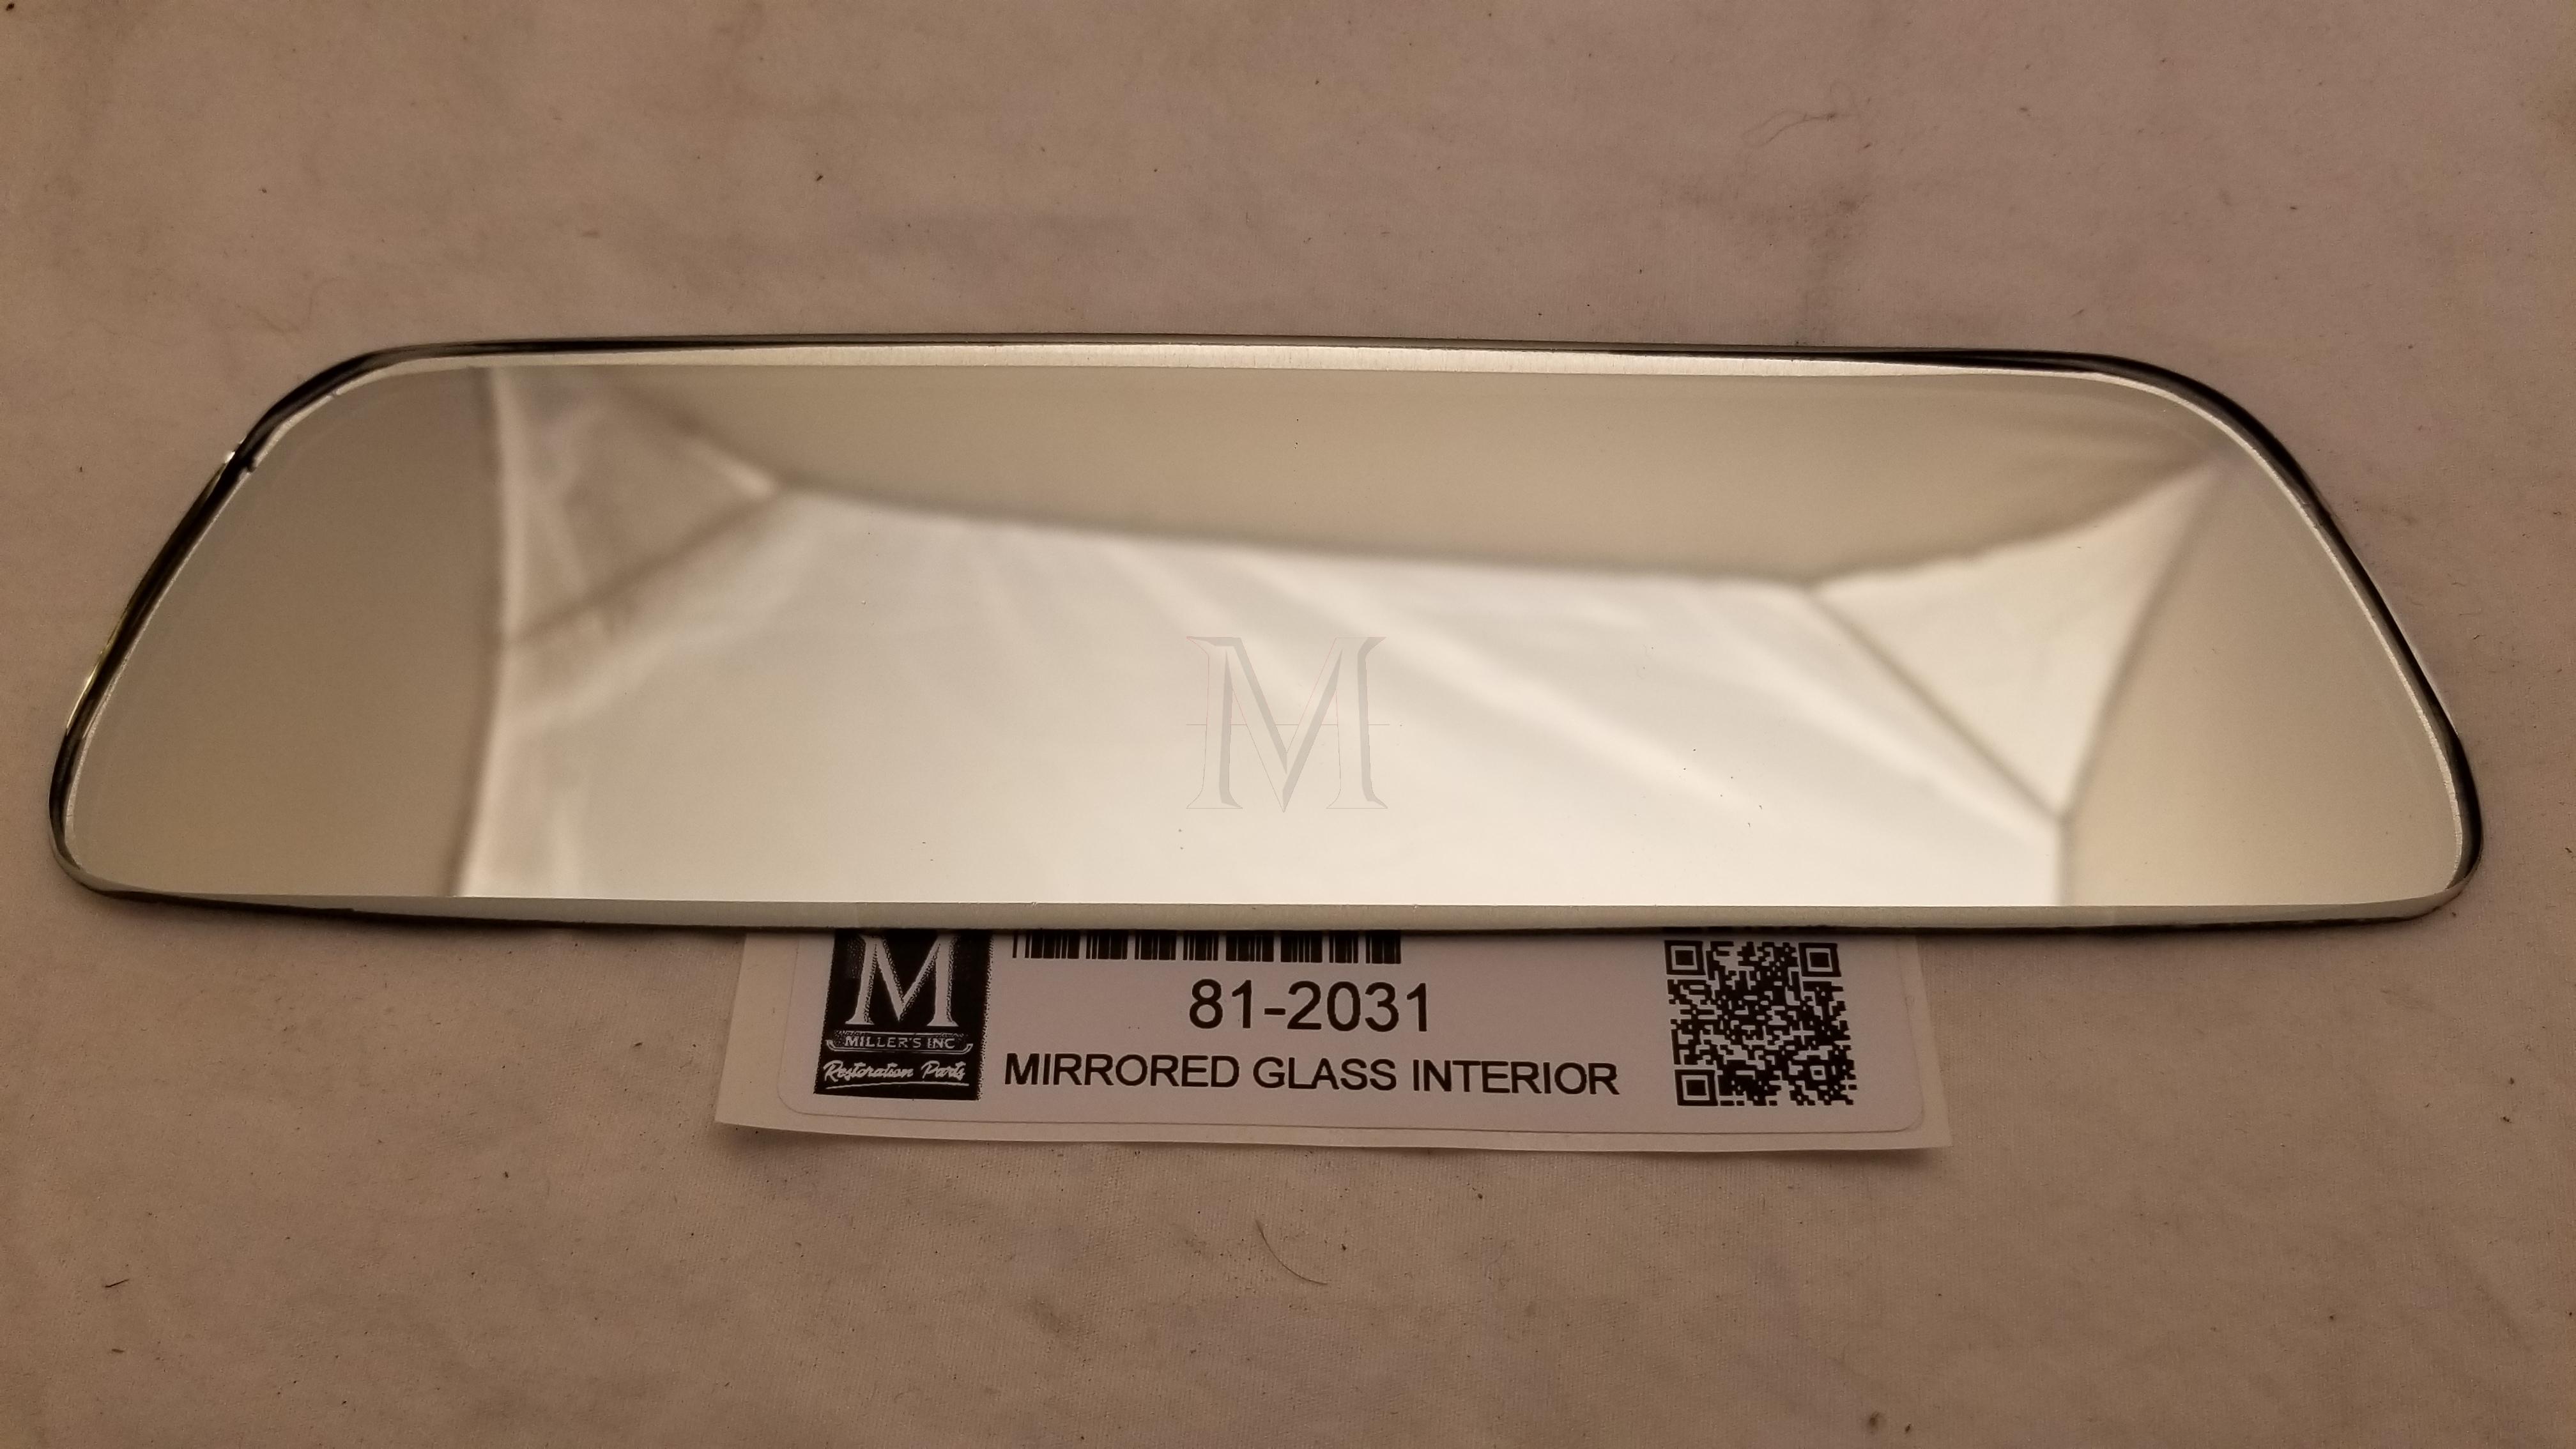 MIRRORED GLASS INTERIOR REAR VIEW